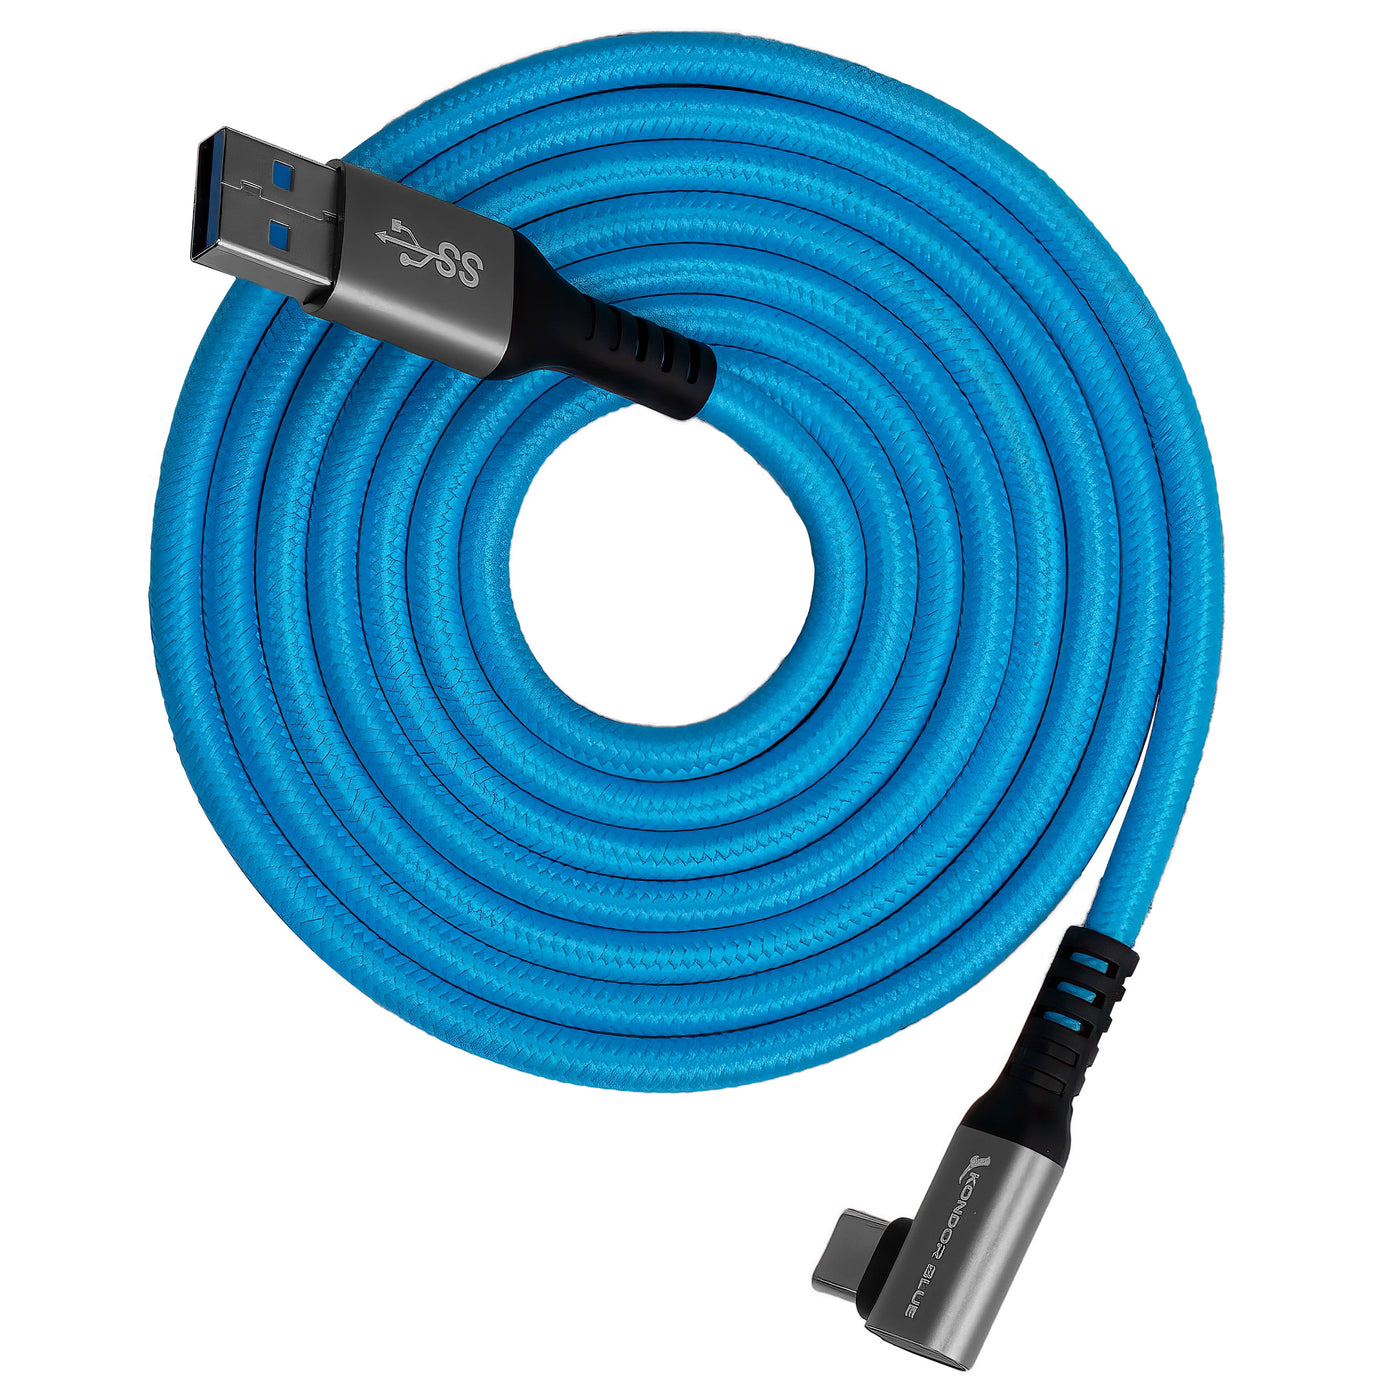 Thunderbolt 4 USB Type-C Charging & Data Transfer Cable – Kondor Blue